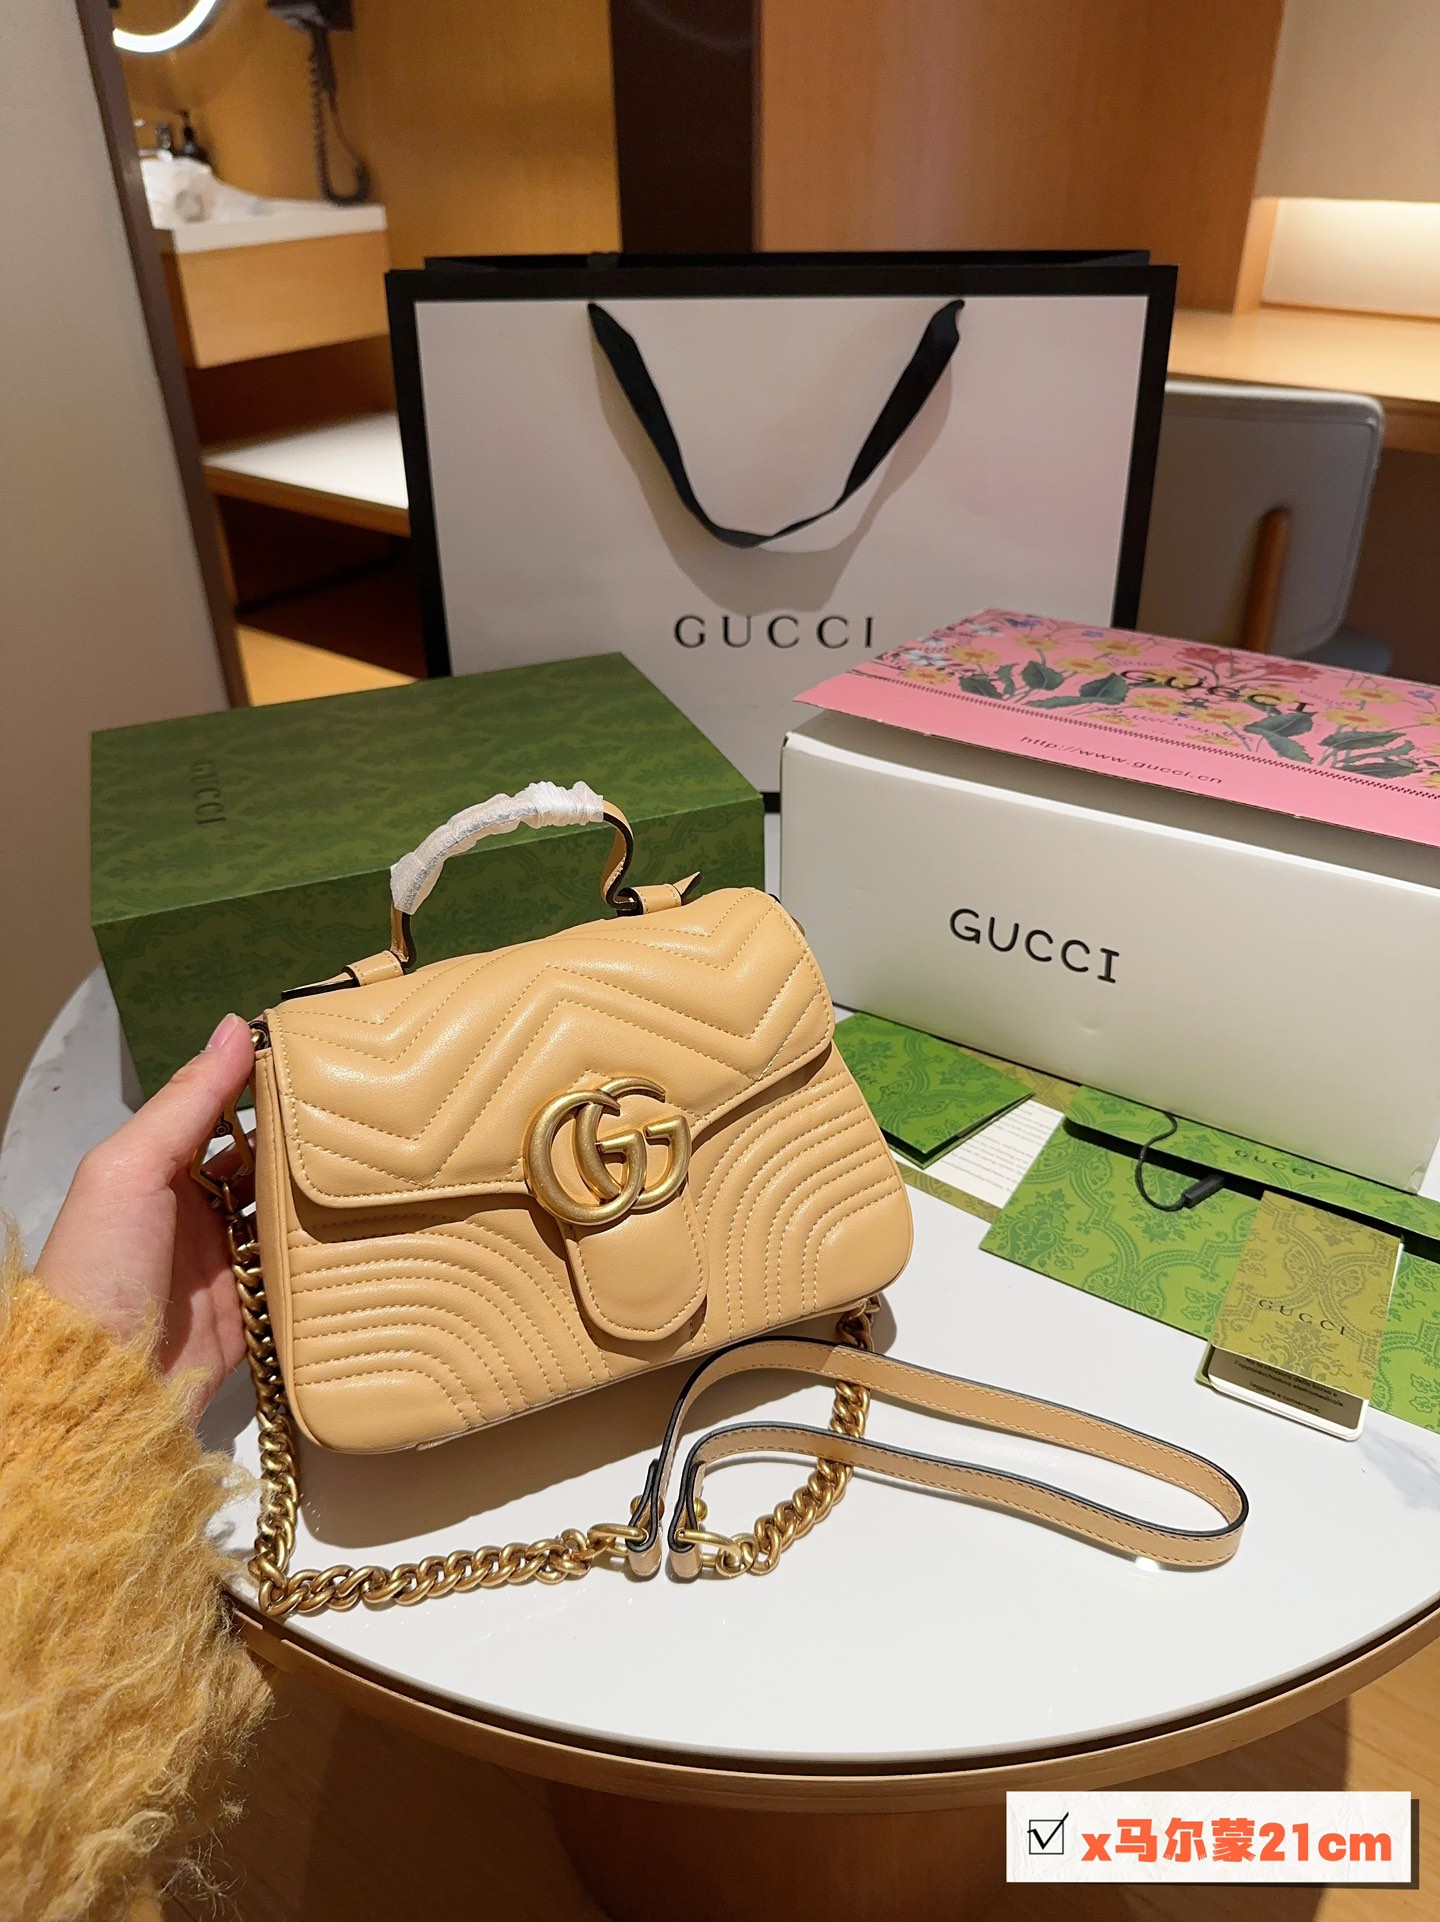 Gucci Marmont Handbags Crossbody & Shoulder Bags Replica 1:1 High Quality
 Chains